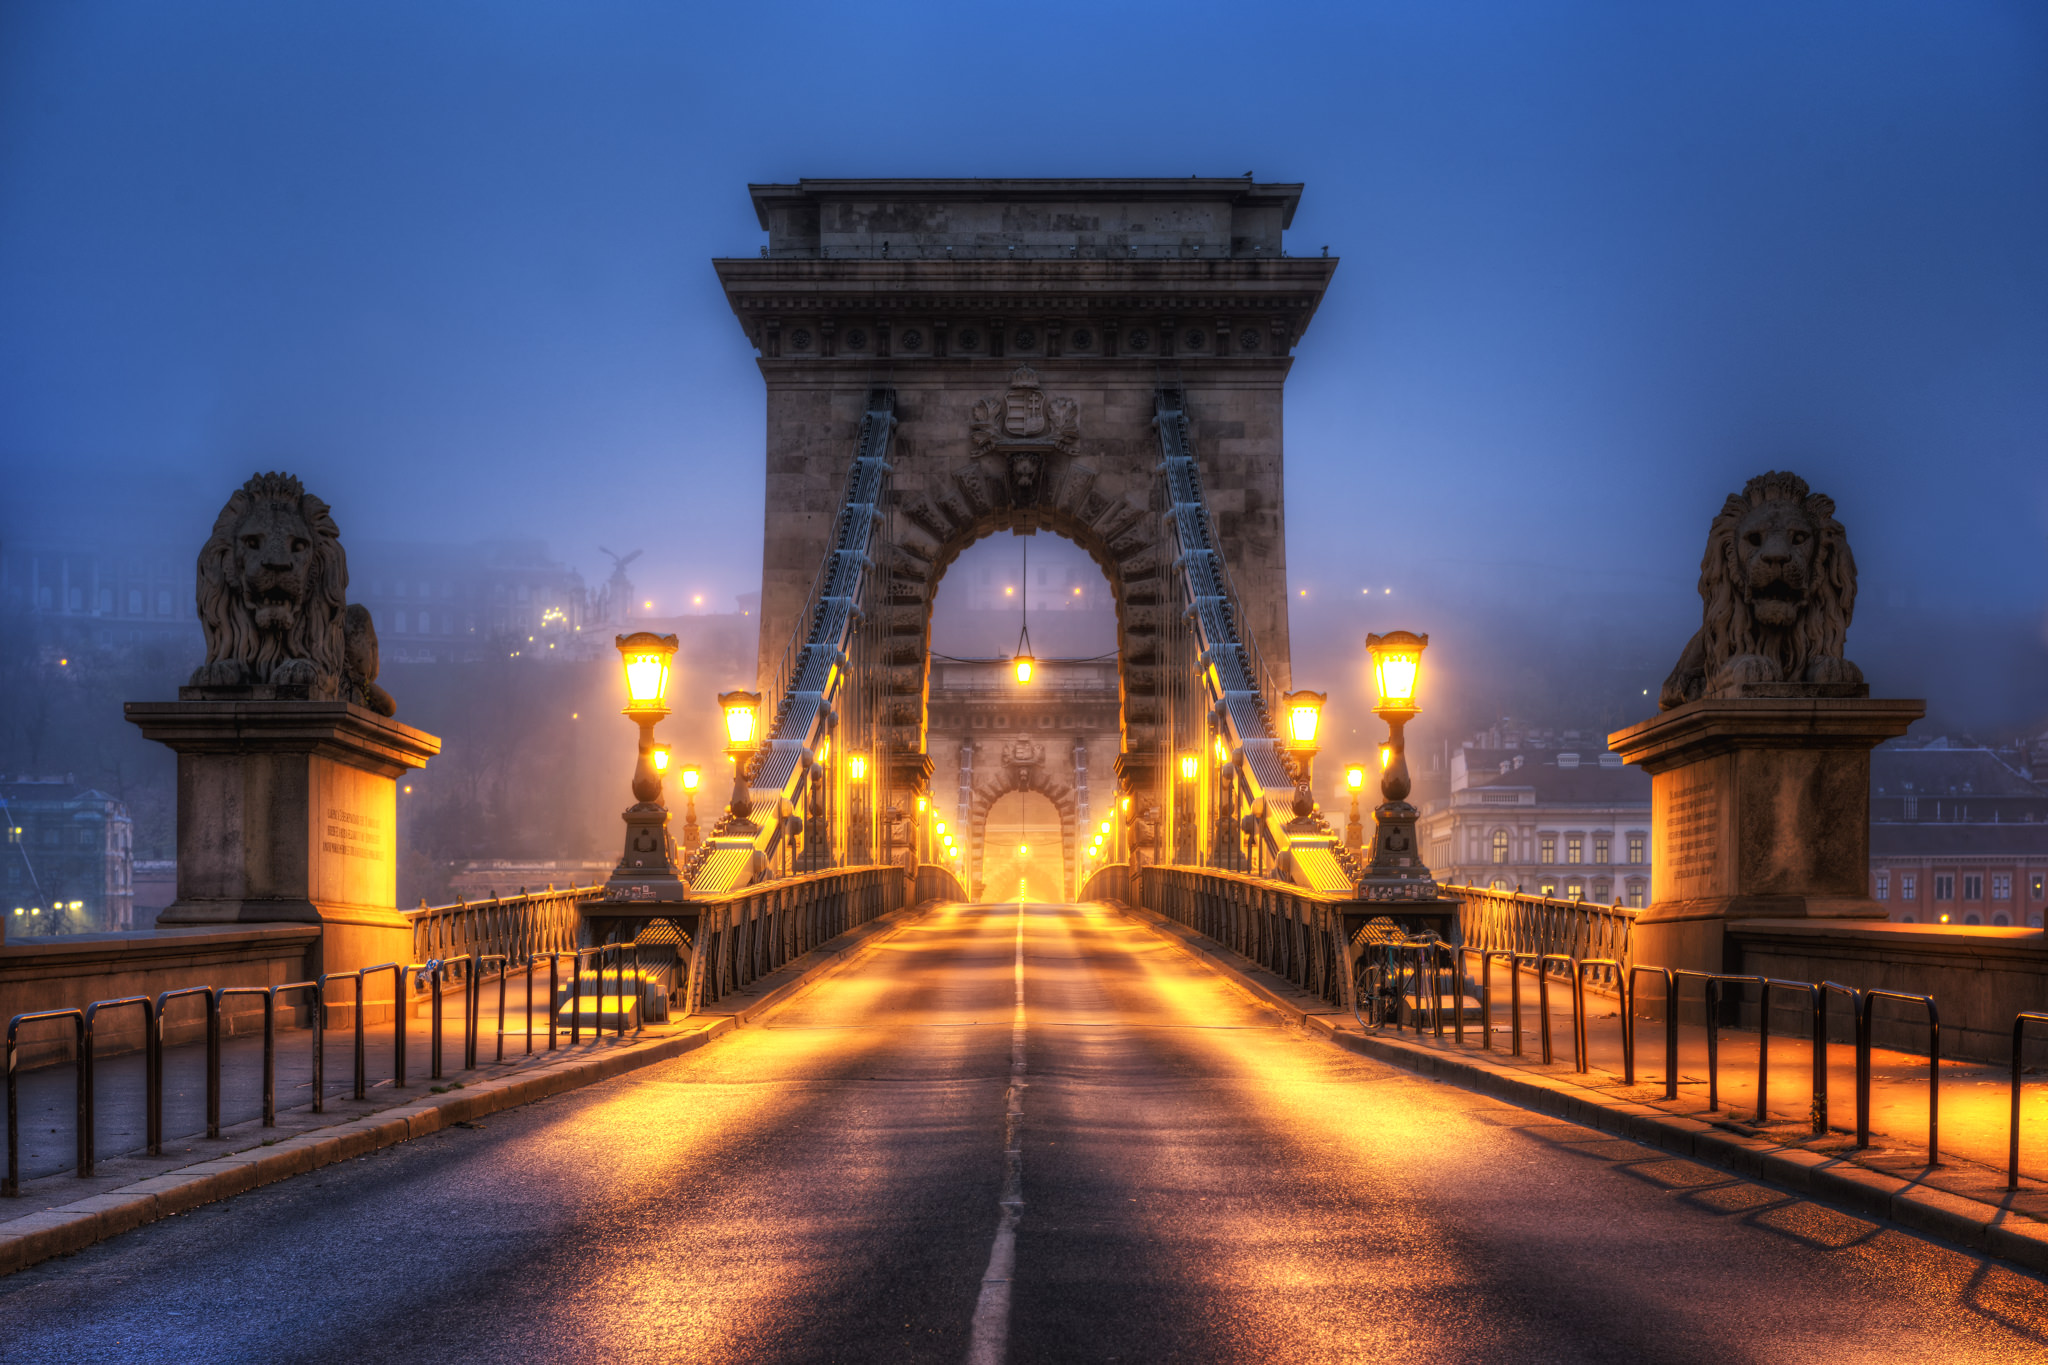 Széchenyi Chain Bridge | Budapest, Hungary - Sumfinity